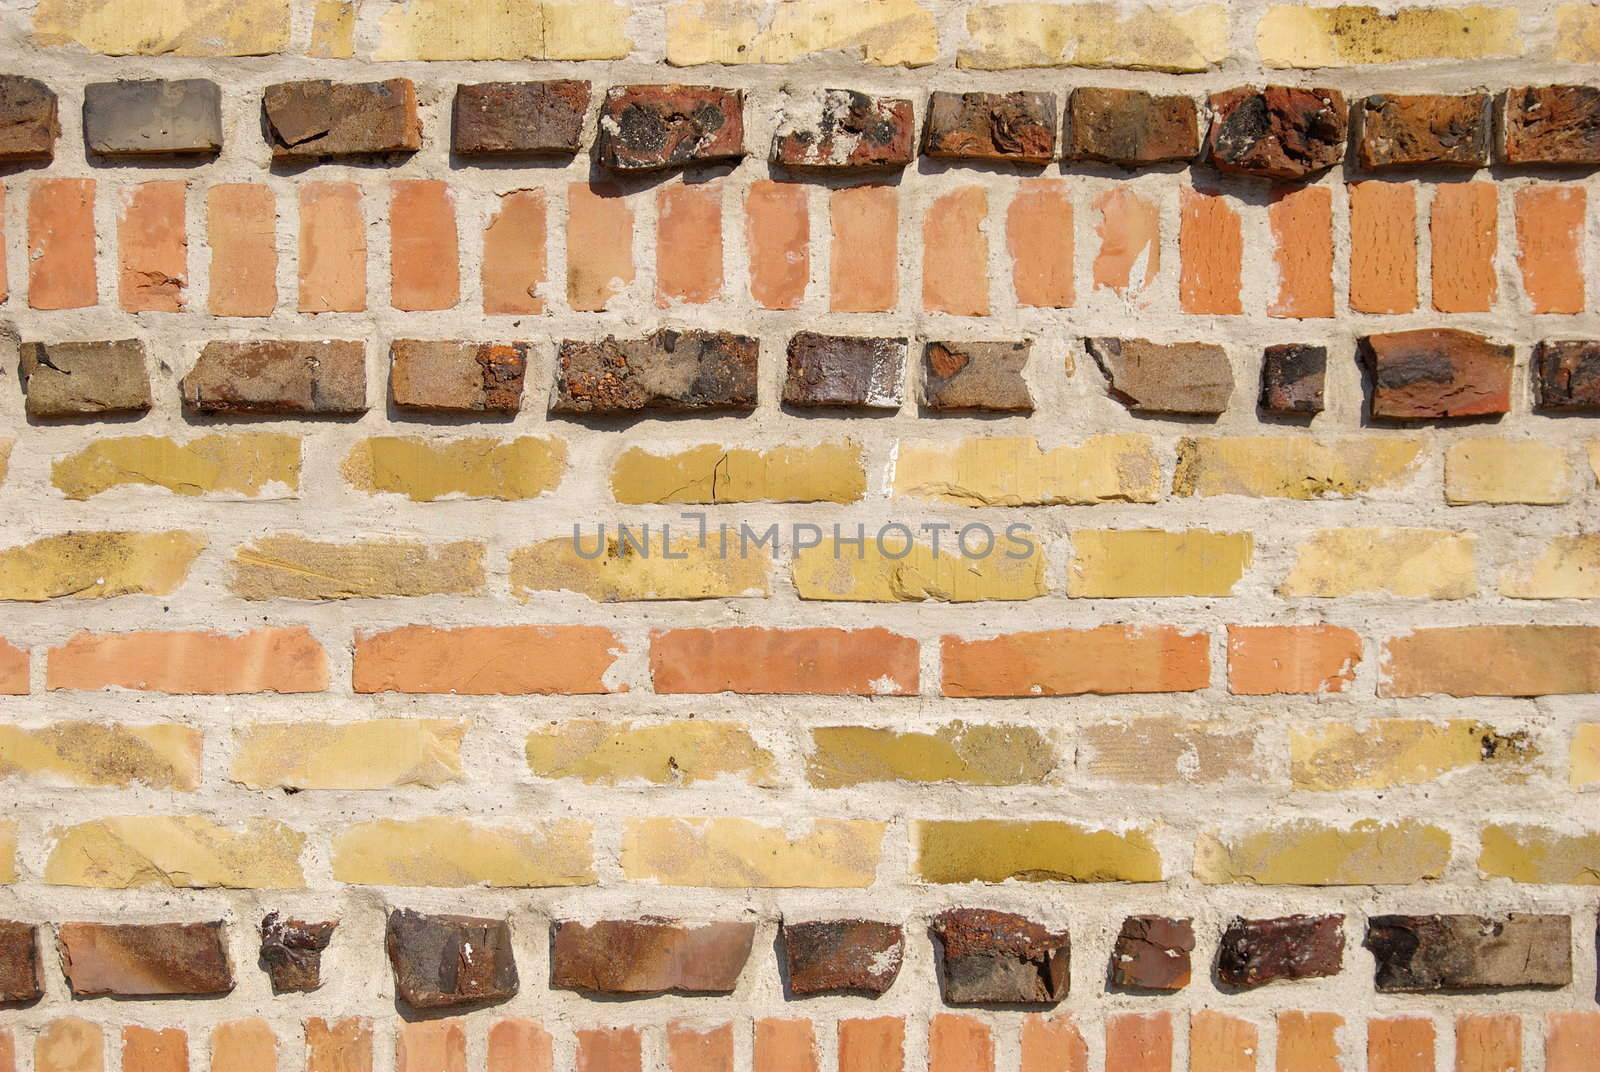 extraordinary wall made of different bricks